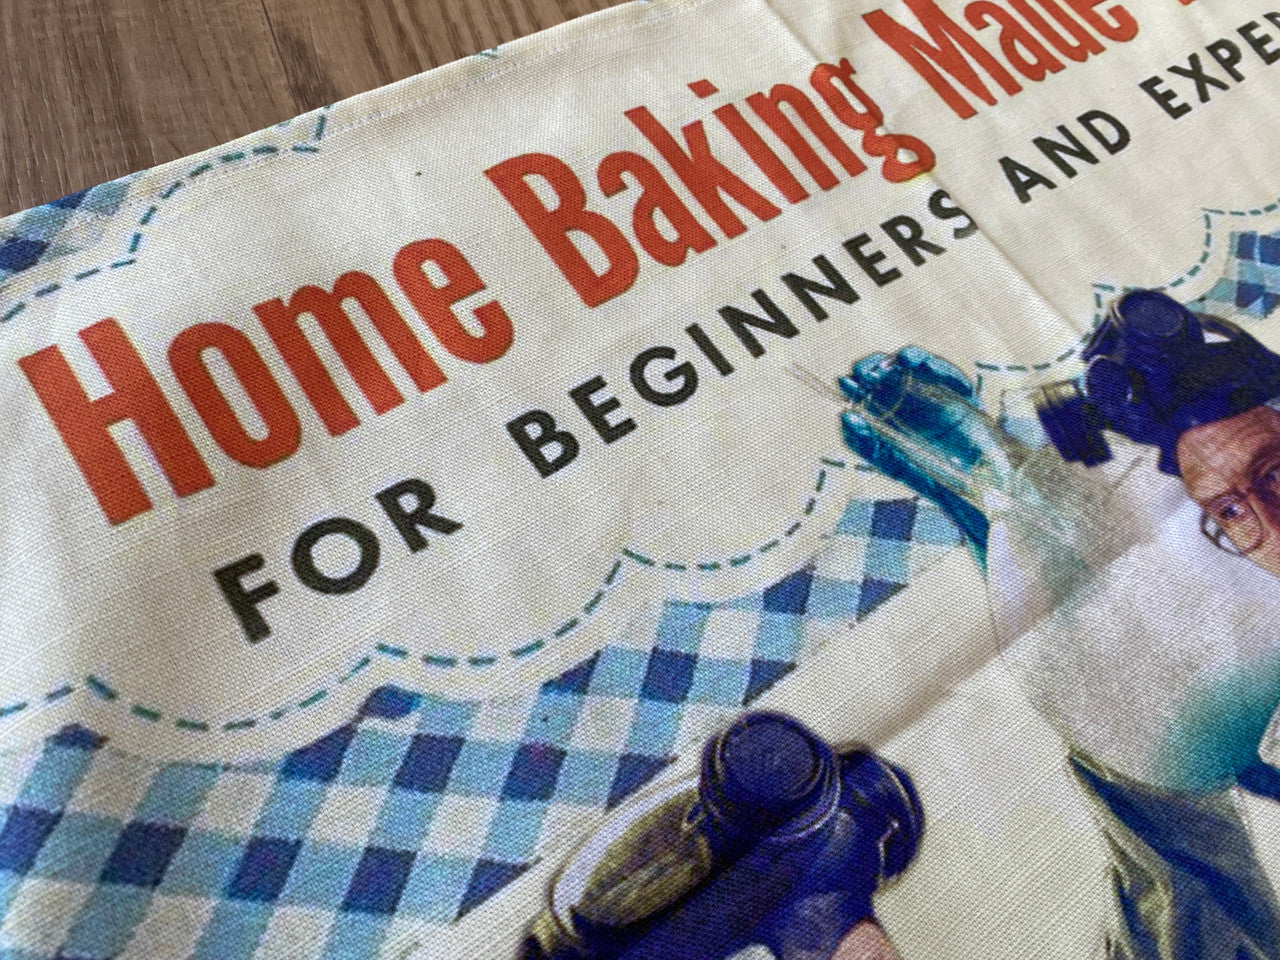 Baking Breaking Bad KiSS Tea Towel - Jesse Pinkman and Walter White - 30s 40s recipe book style - Vintage theme - Kitchen Cotton Linen